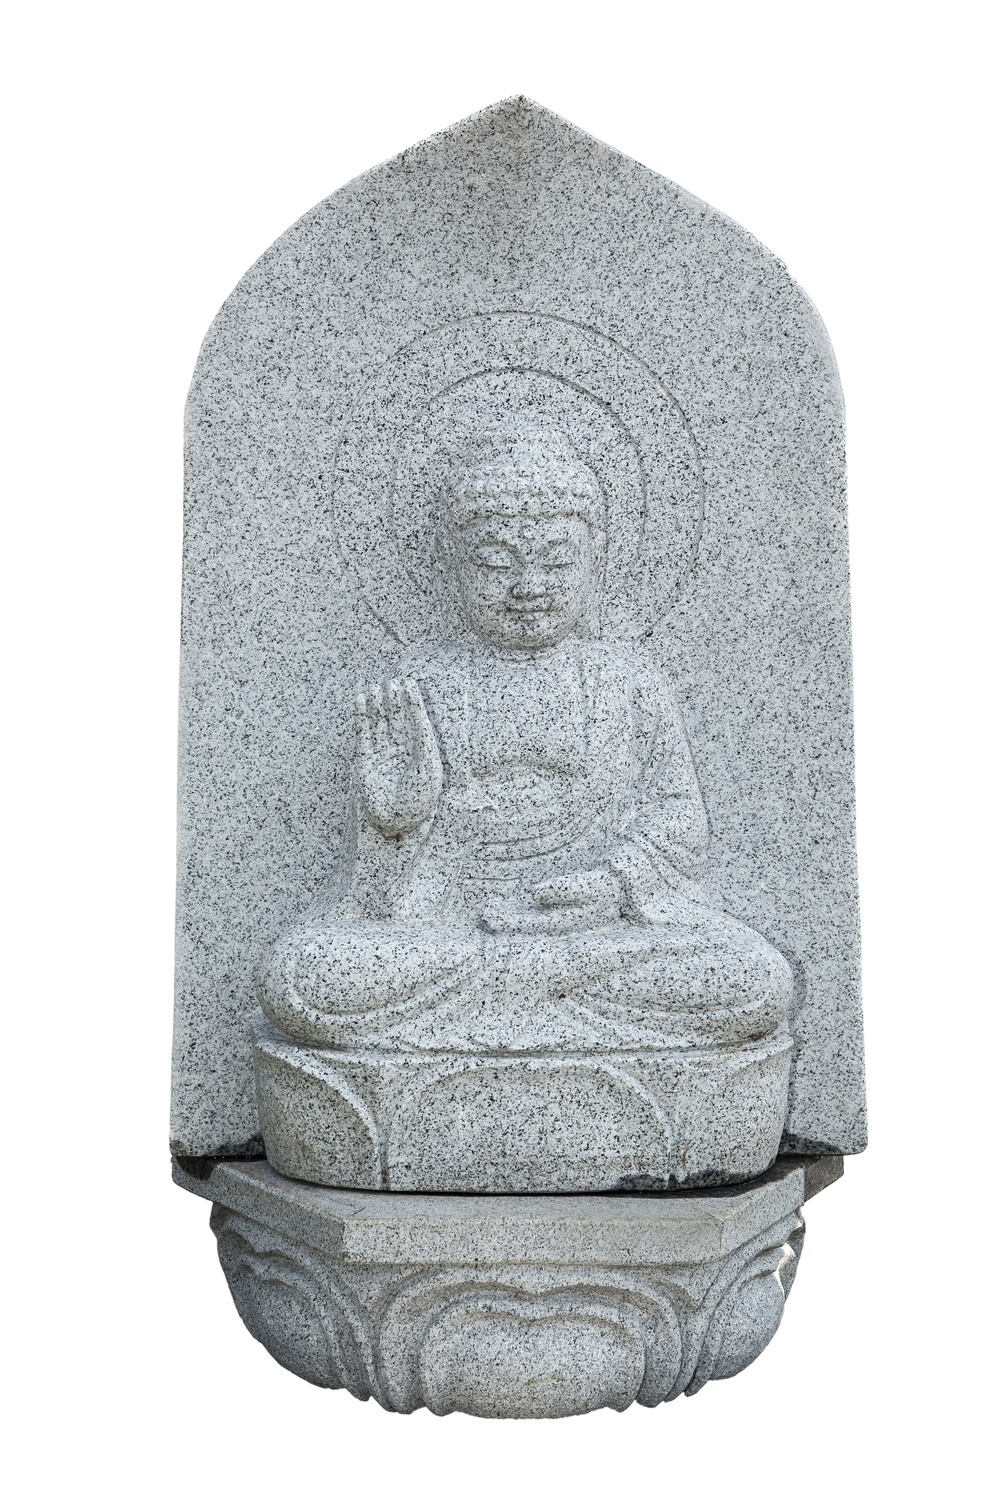 Buddha "Mara" sitzend, mit Rückwand, Höhe: 60cm